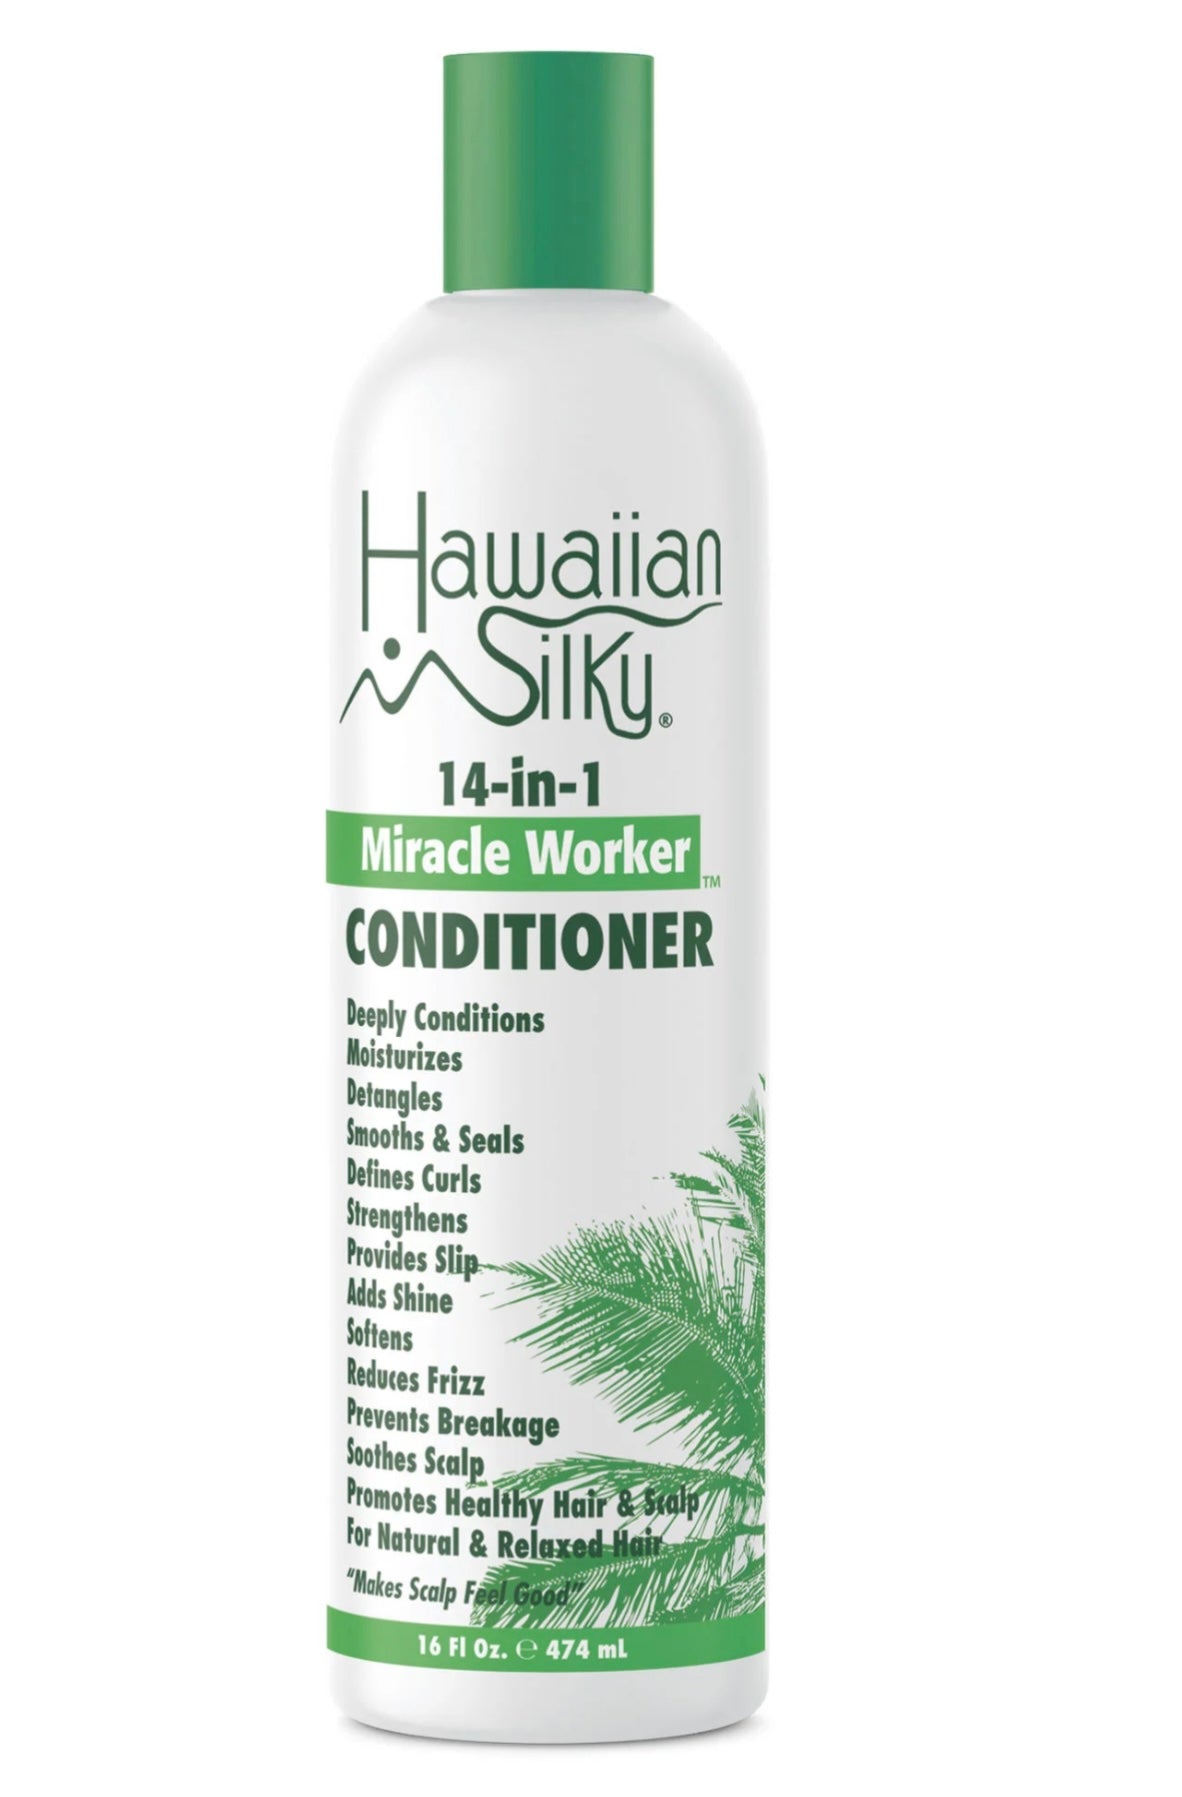 Hawaiian Silky Miracle Worker Conditioner 16oz.